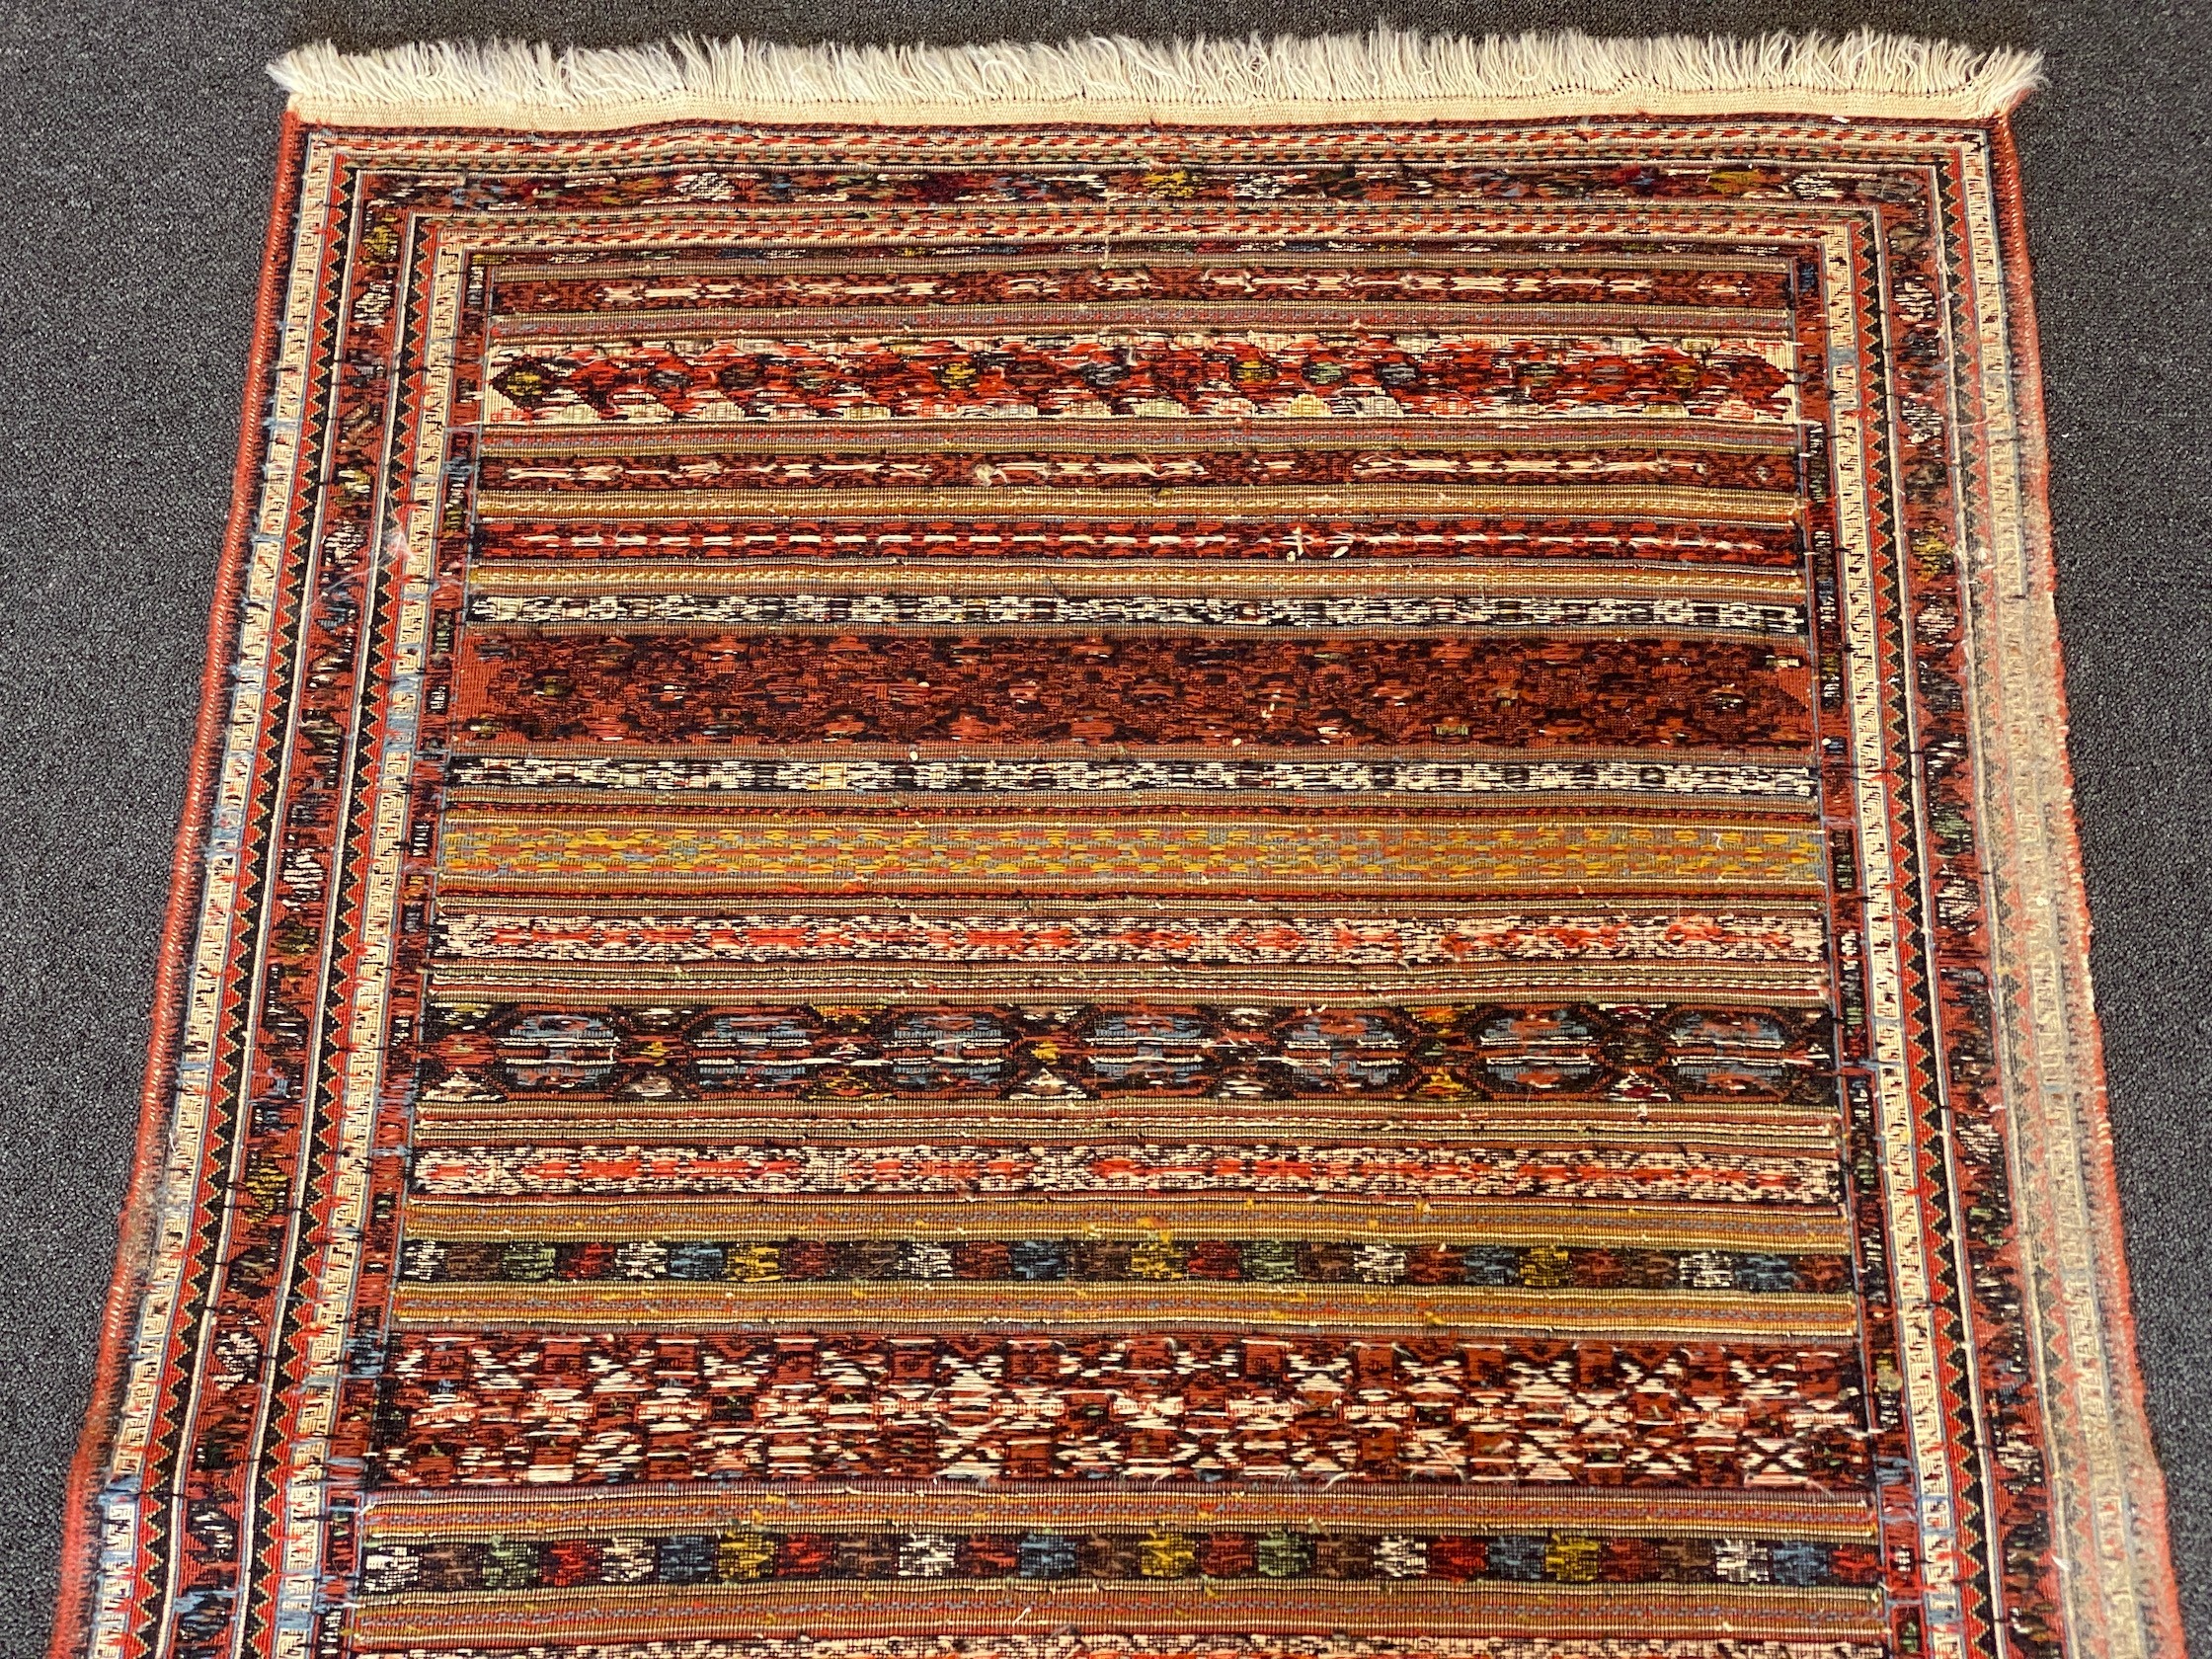 A fine Sumac flatweave polychrome rug 160 x 100 cms